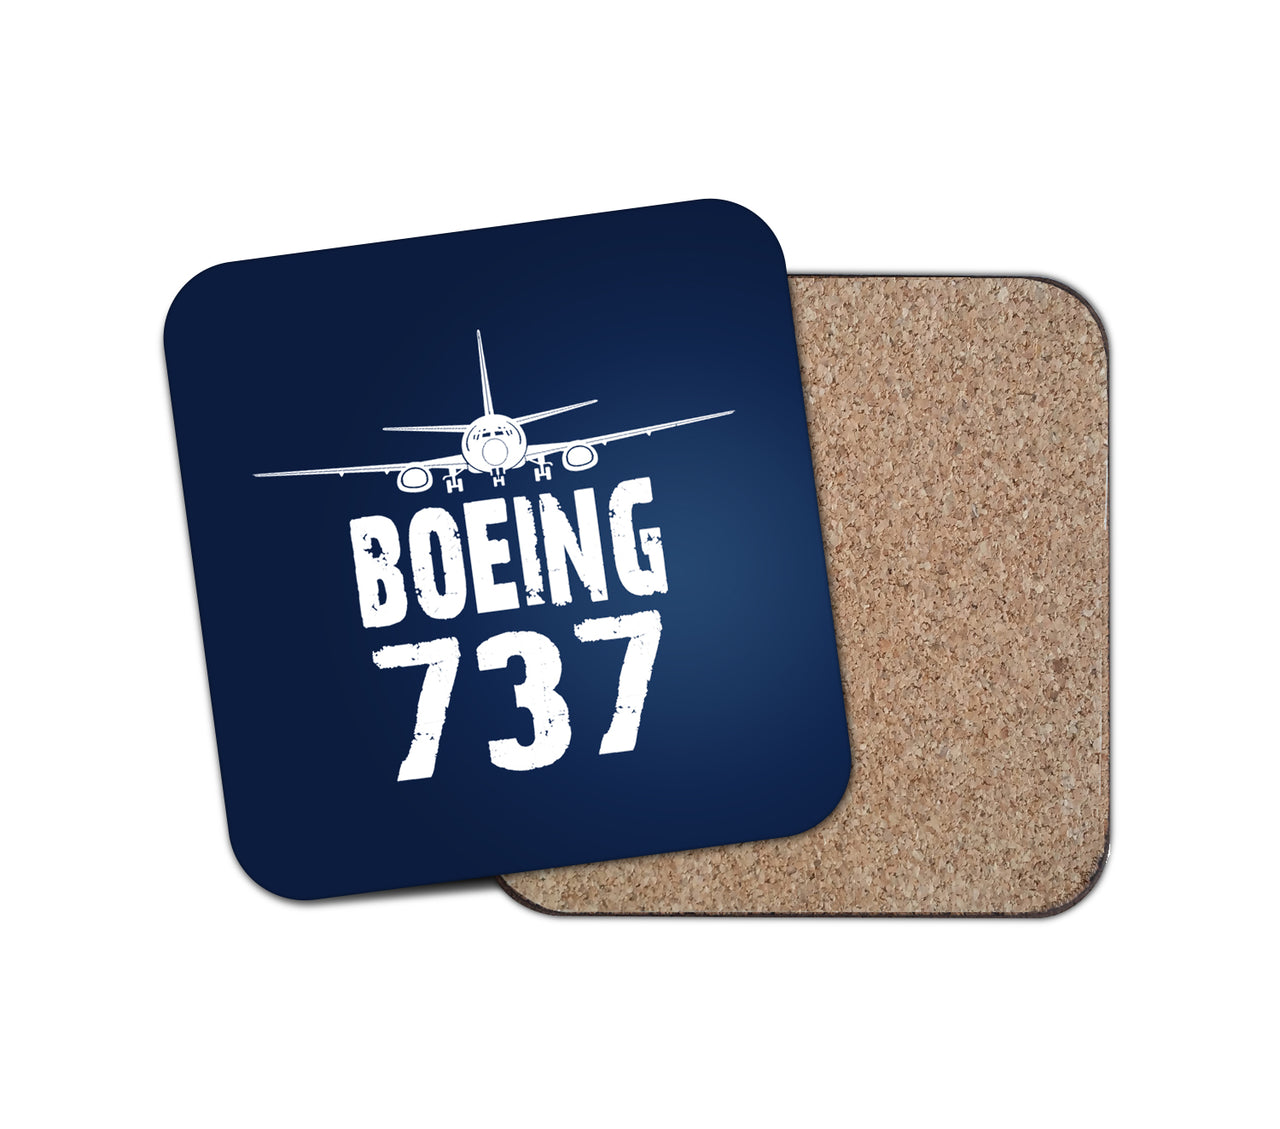 Boeing 737 & Plane Designed Coasters